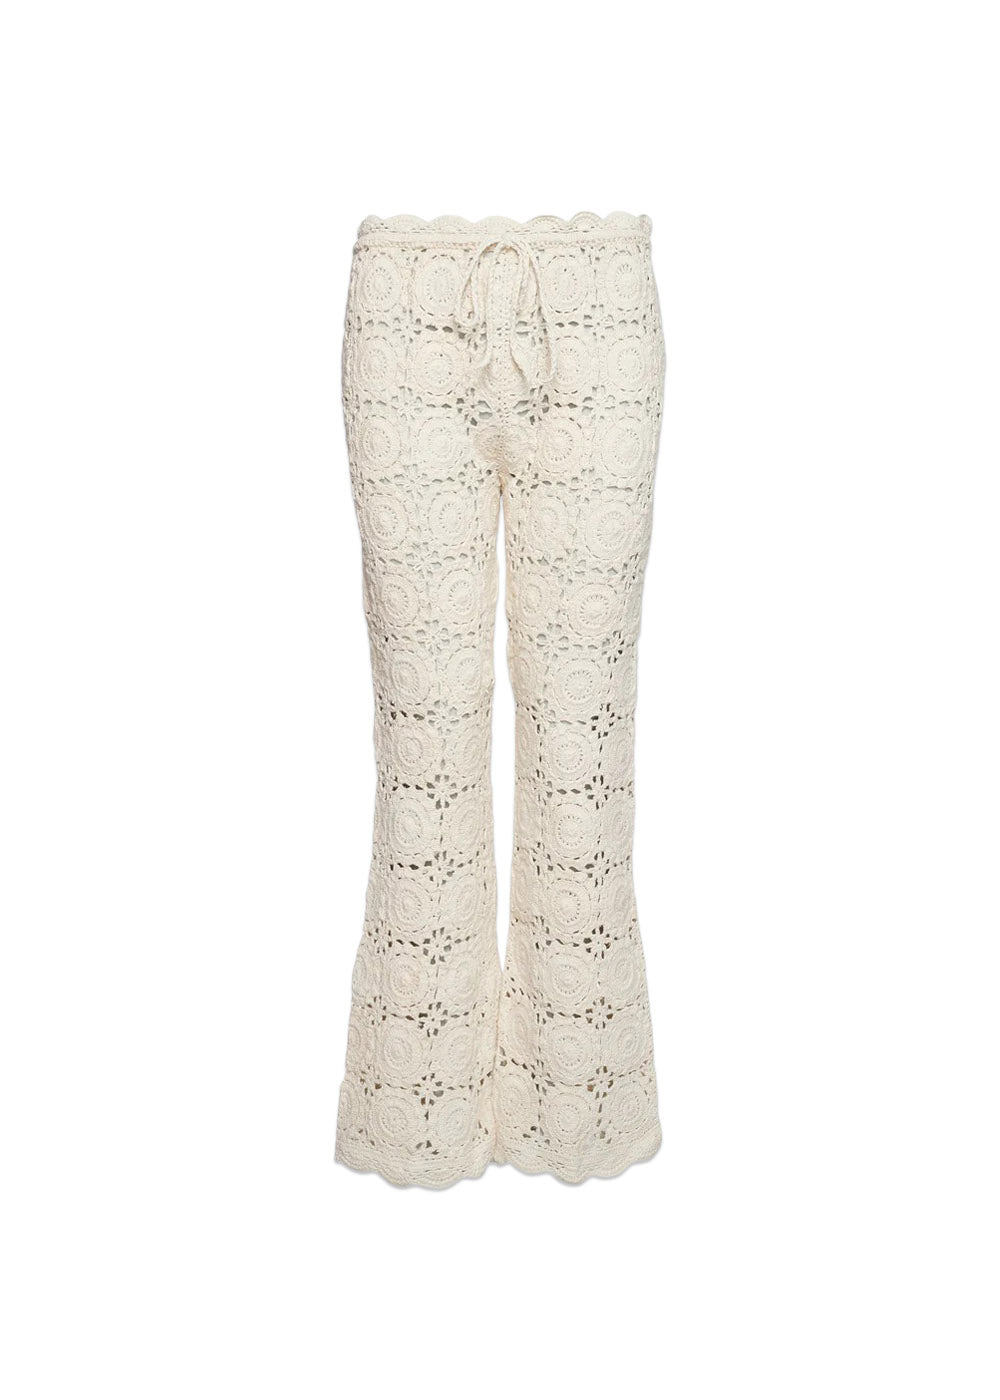 Sissel Edelbos Wilma Crochet Pants - Bone White. Køb bukser her.